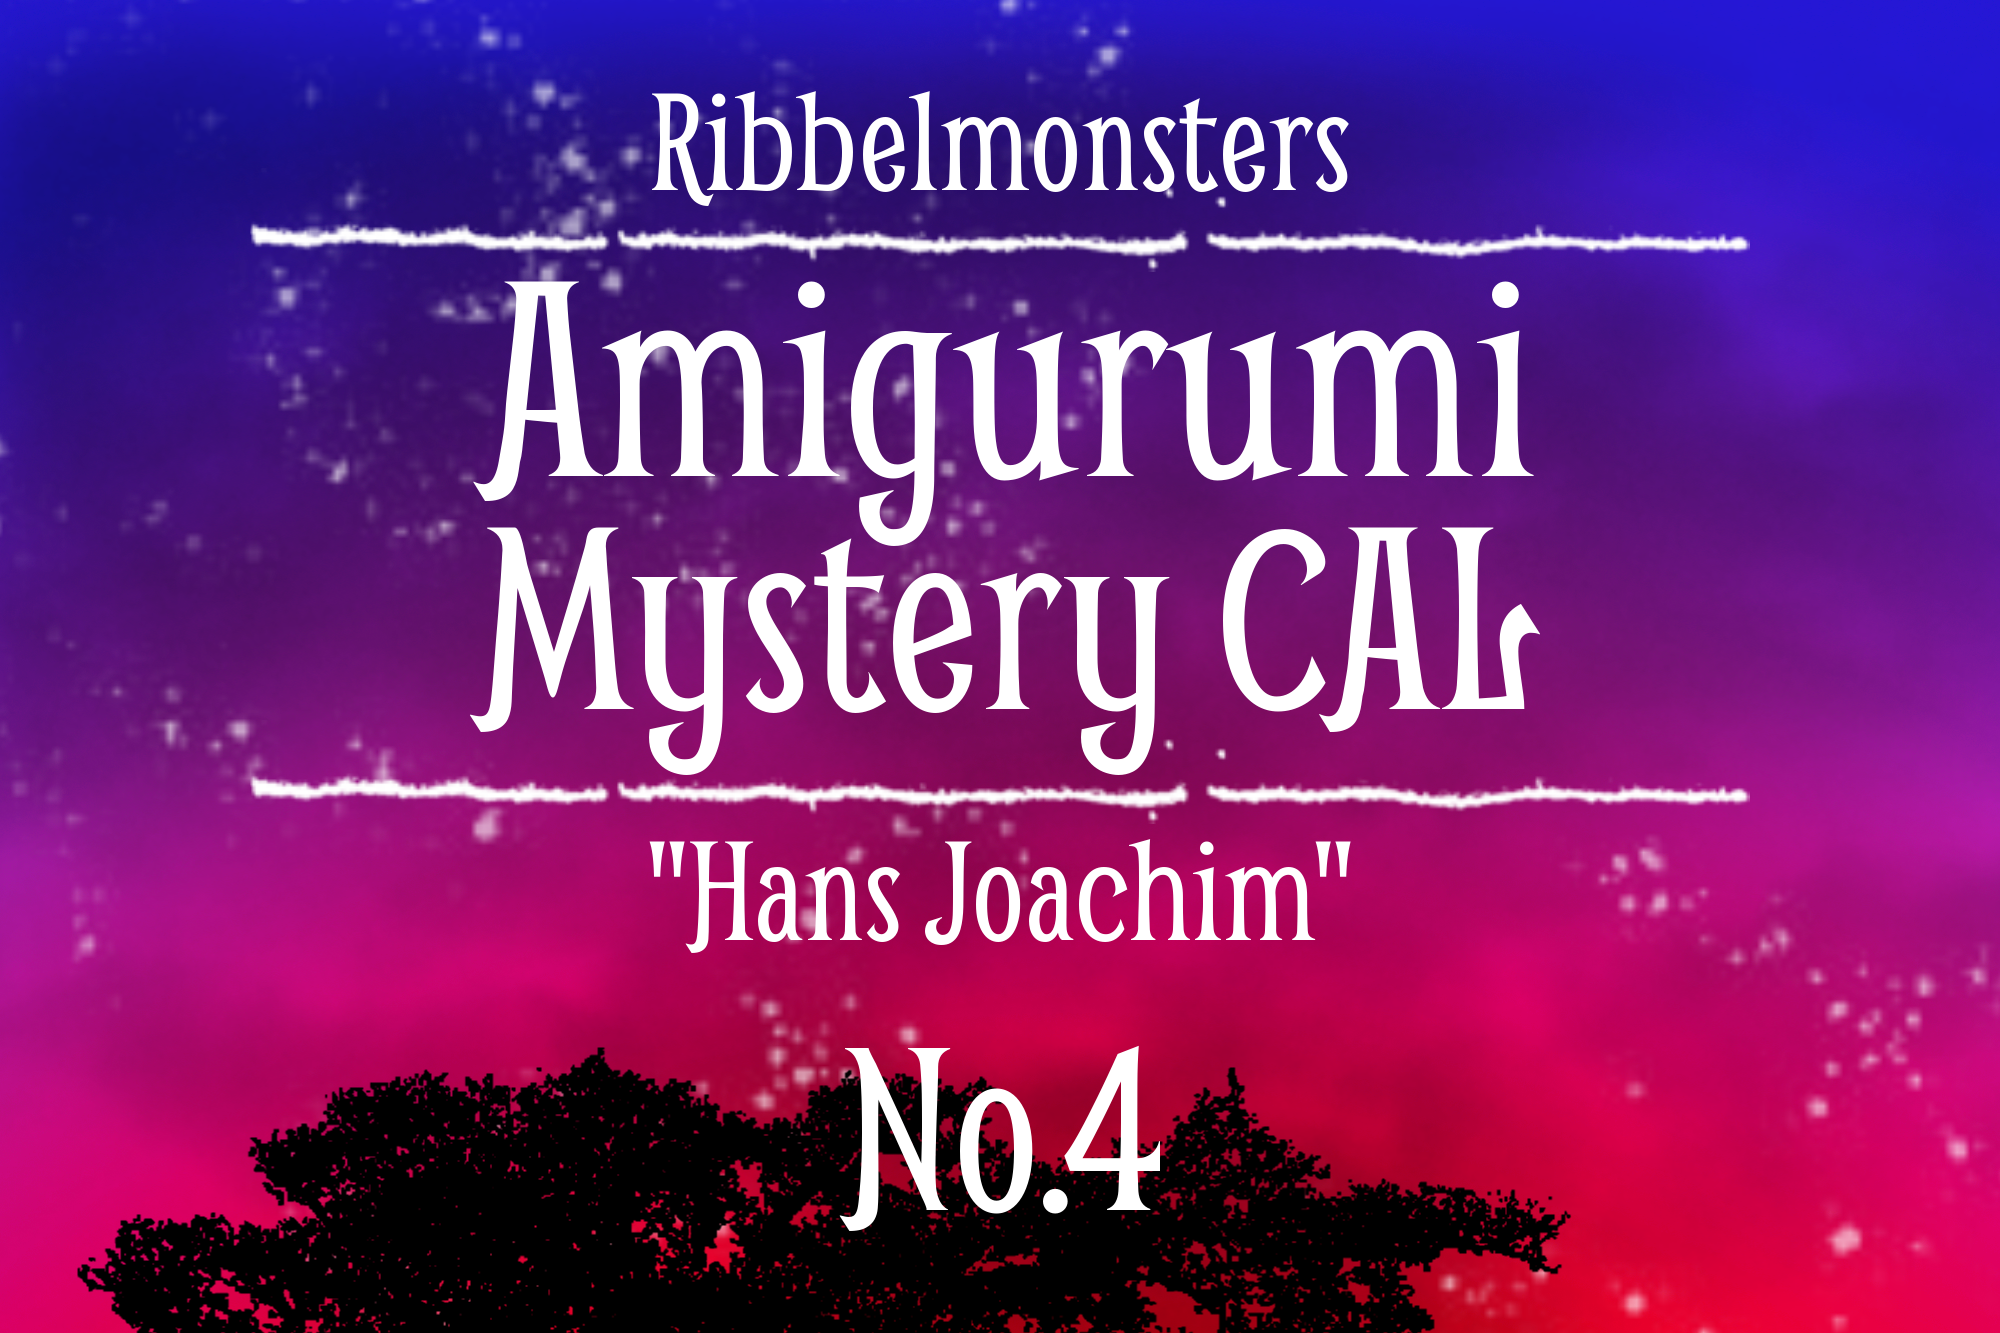 Amigurumi Mystery CAL – “Hans Joachim” – Teil 4